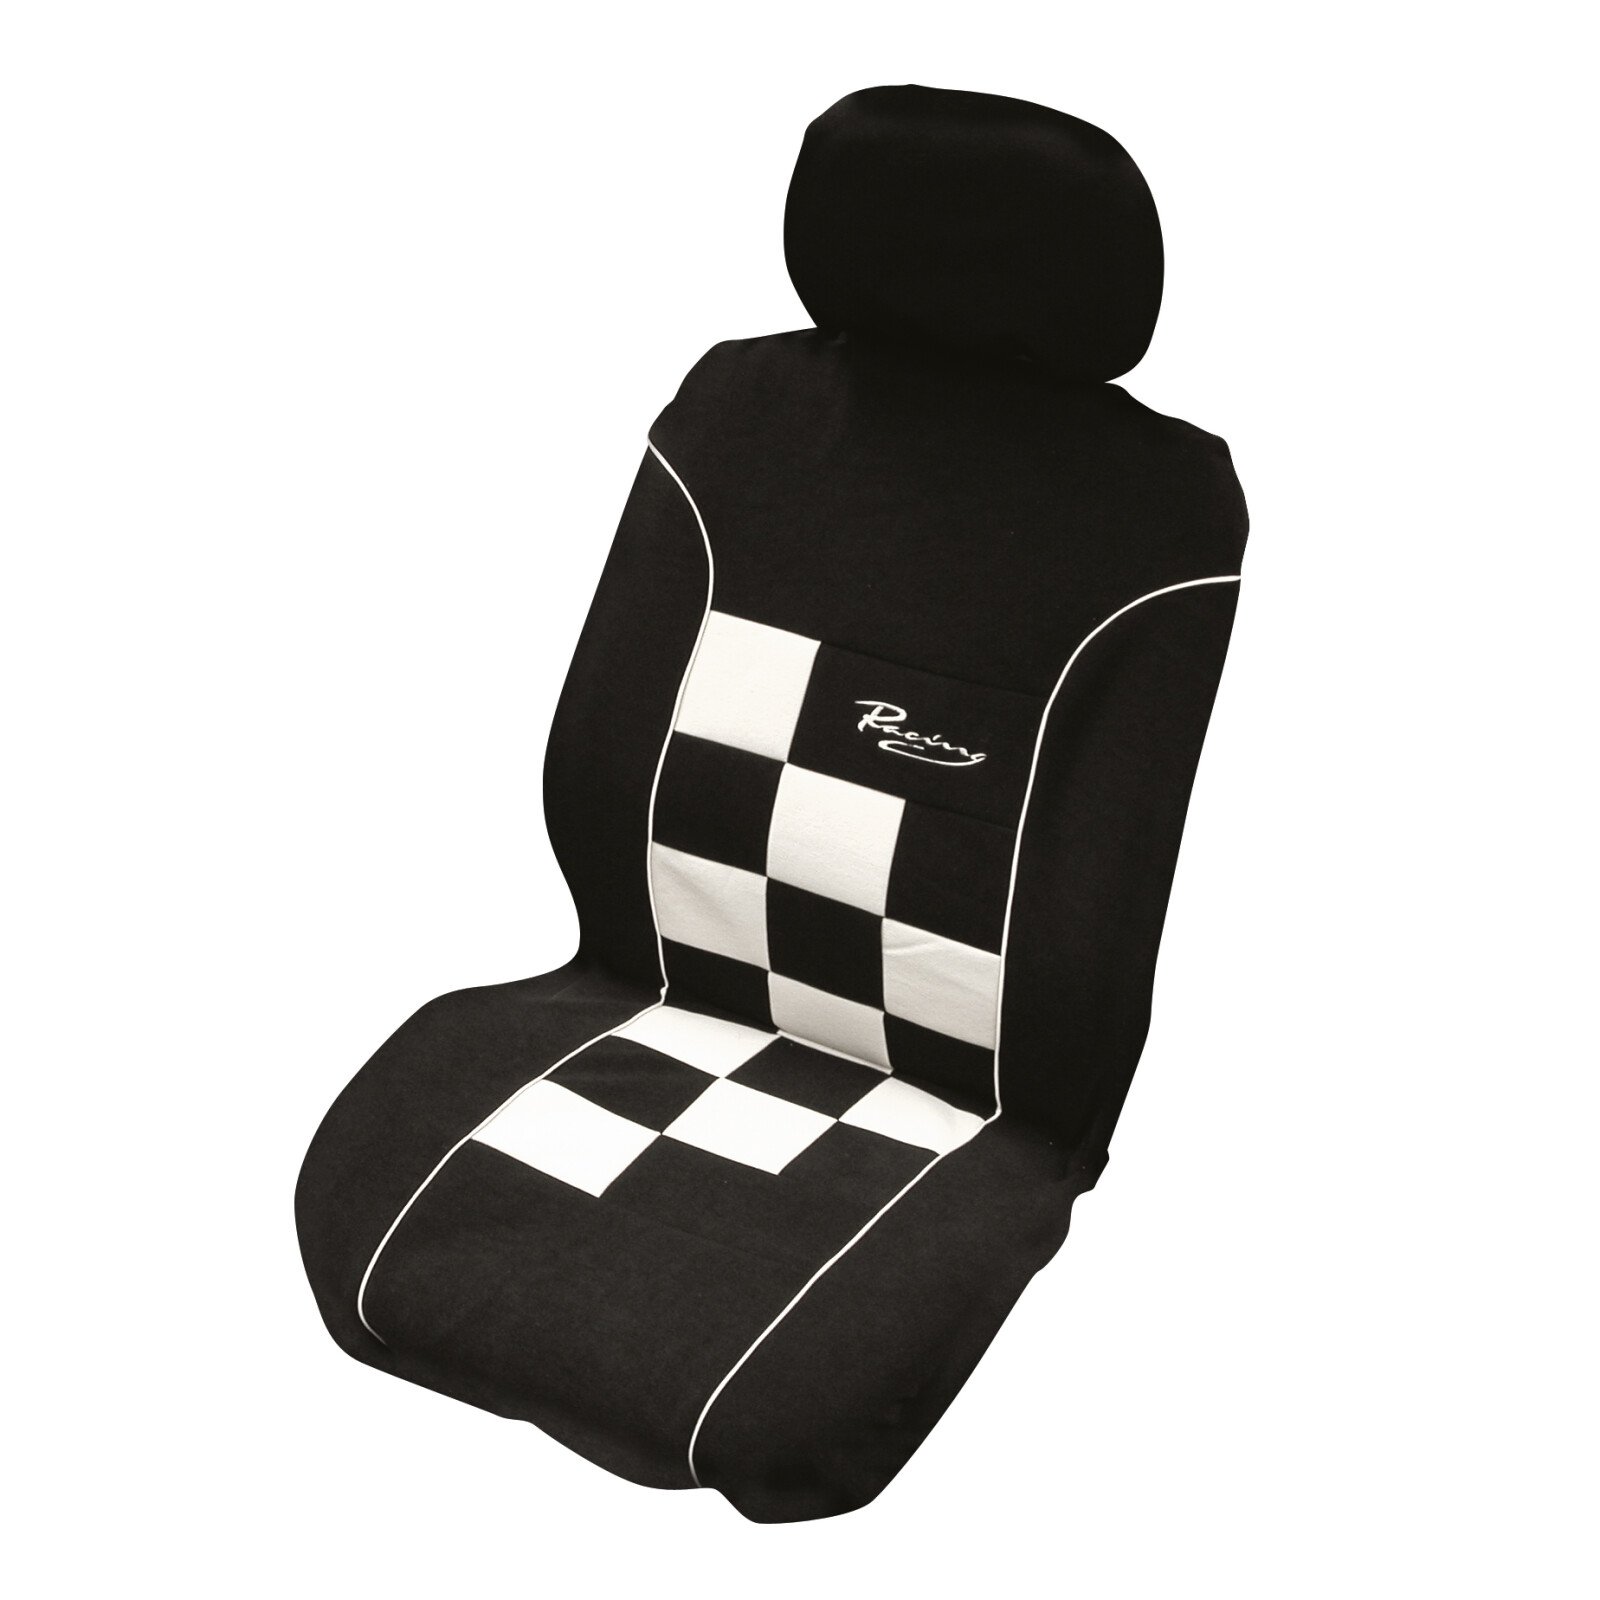 Huse scaun Racing negru cu alb 8buc thumb